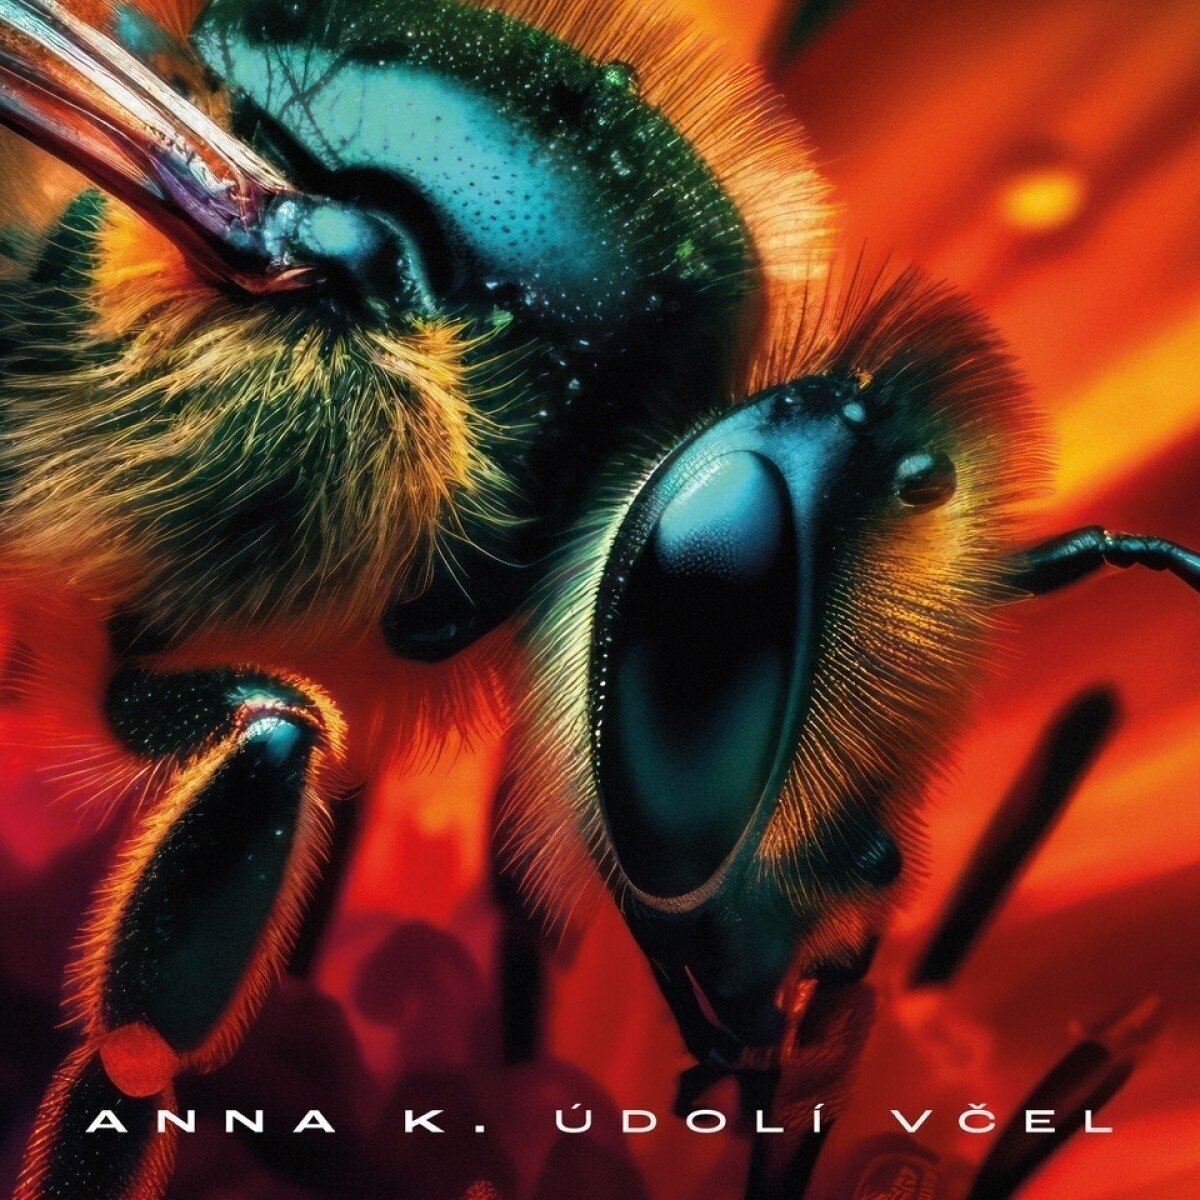 Vinyl Record Anna K - Údolí včel (Limited Edition) (Blue Marbled Coloured) (LP)